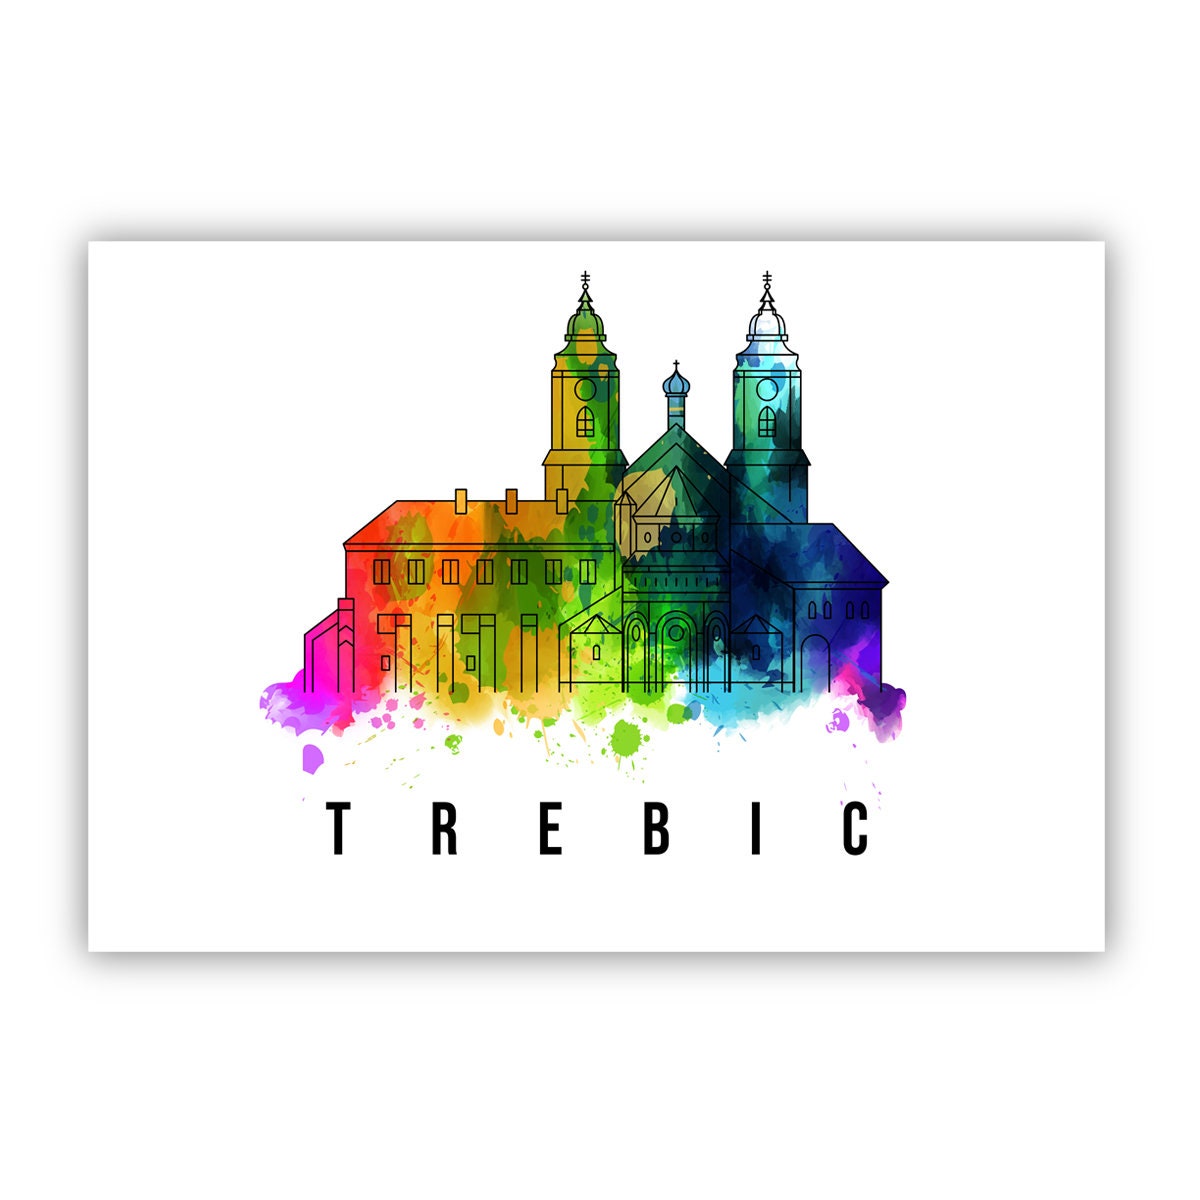 Trebic Czech Republic Poster, Skyline poster cityscape poster, Landmark City Illustration poster, Home wall decoration, Office wall art